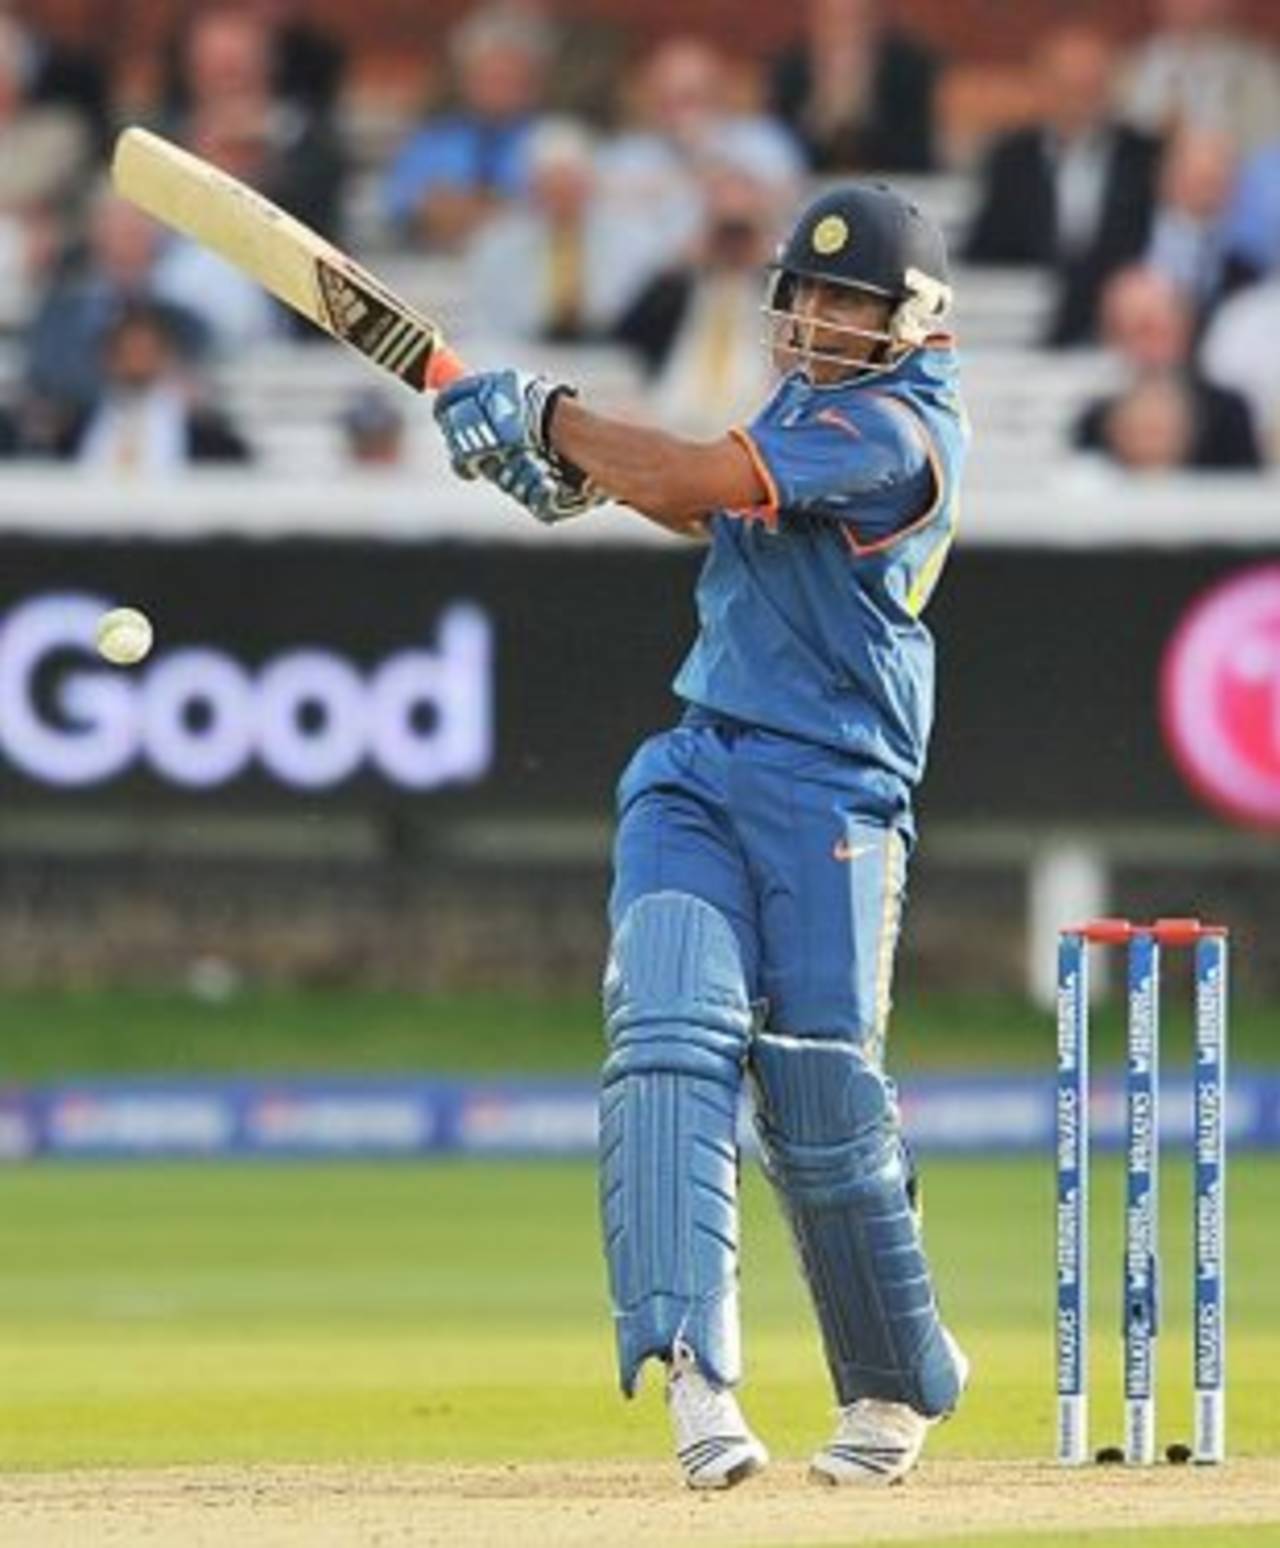 Ravindra Jadeja struggled in his innings of 25, England v India, ICC World Twenty20 Super Eights, Lord's, June 14, 2009